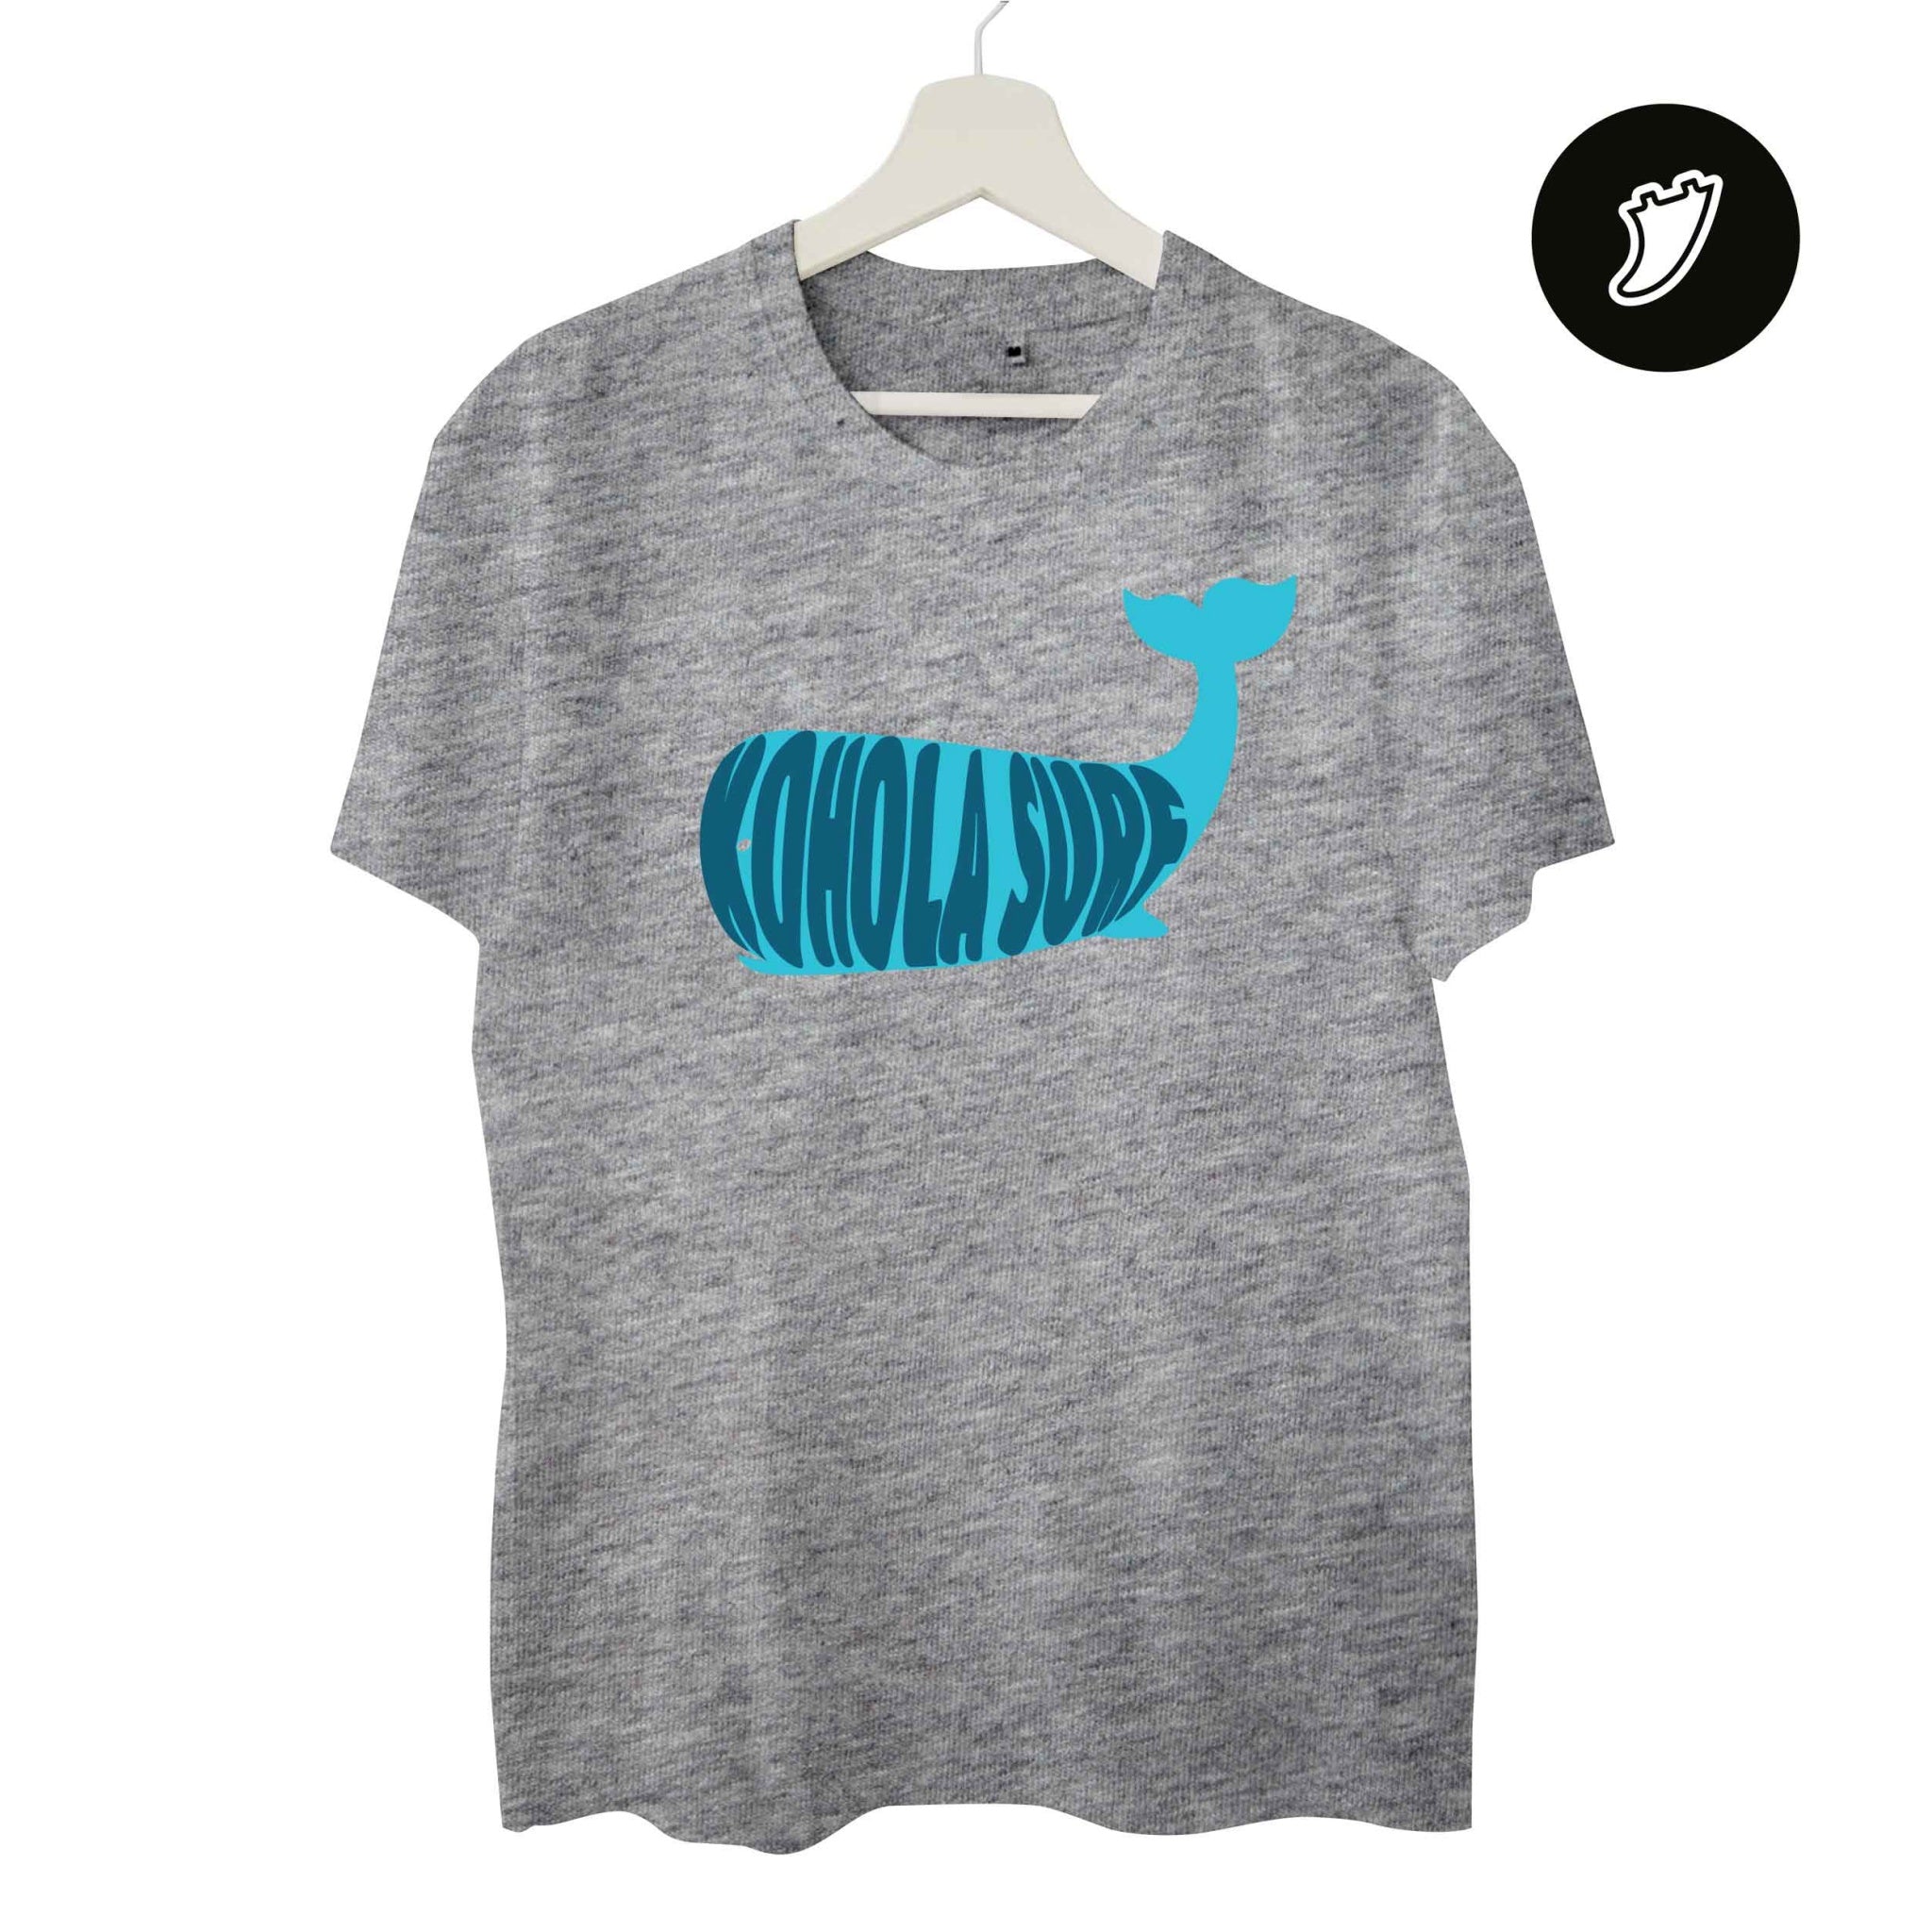 Kohola Whale Man T-Shirt